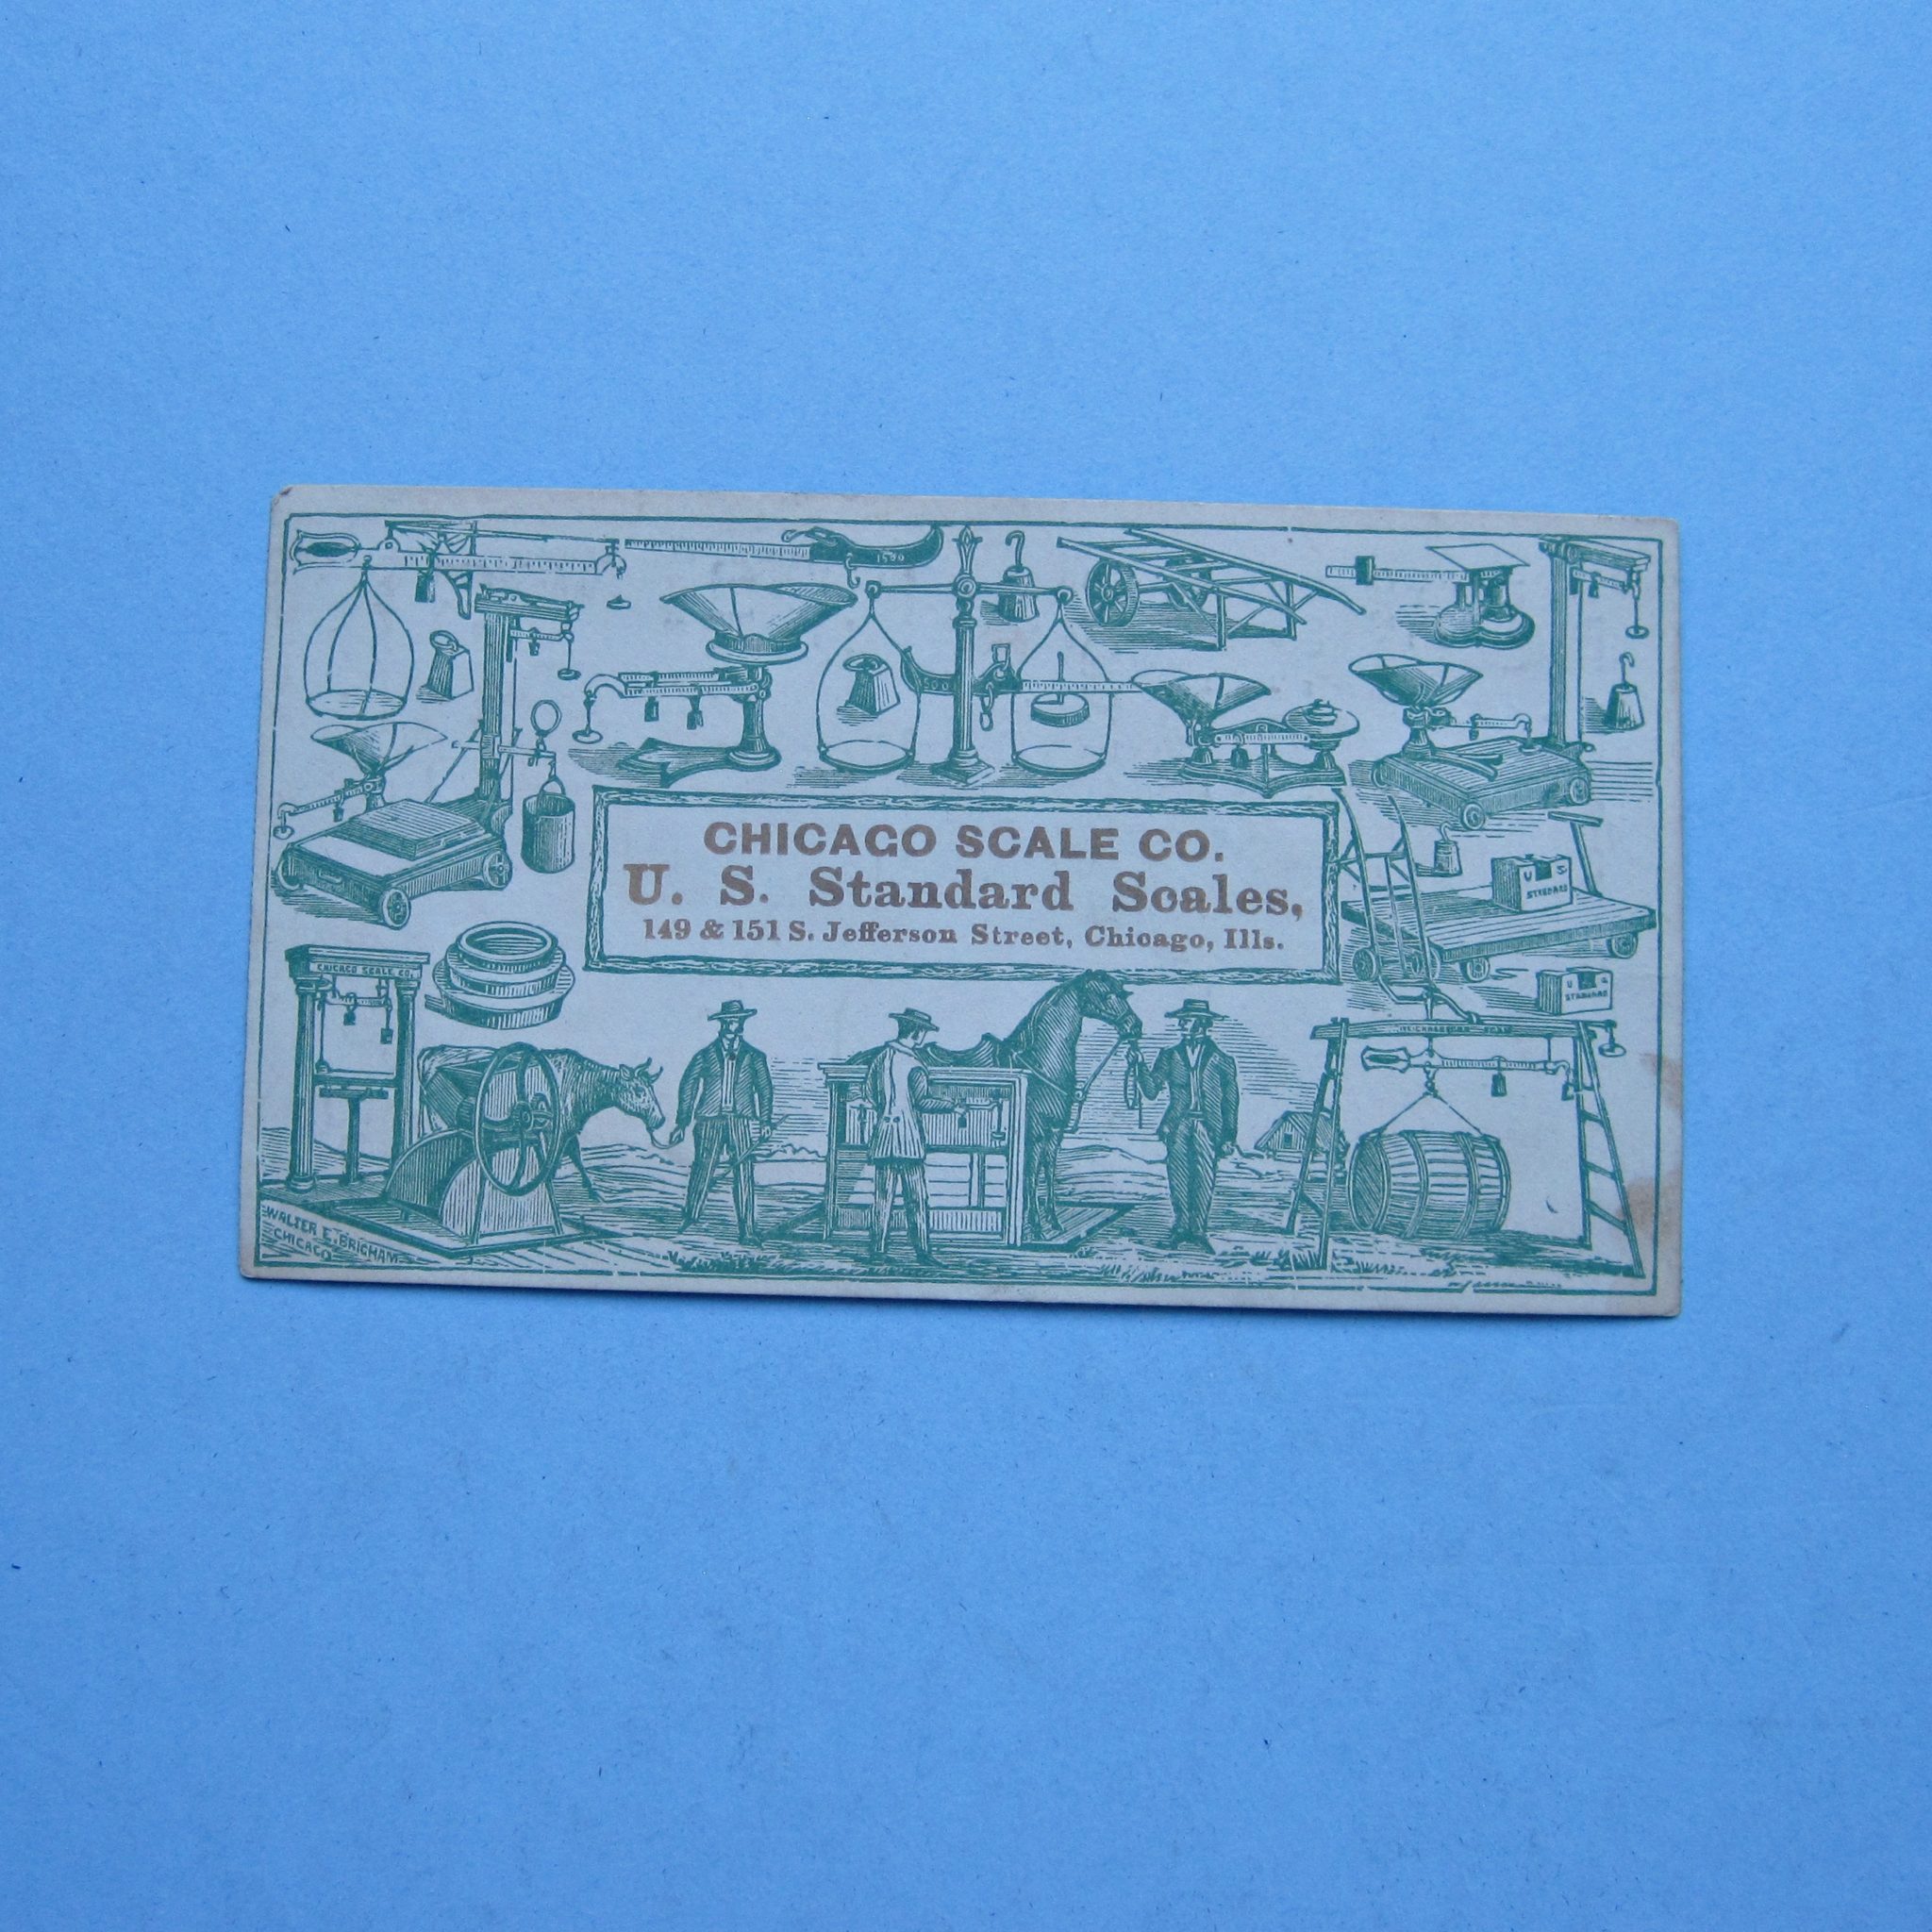 Rare 19th-Century Trade Card for Chicago Scale Co.